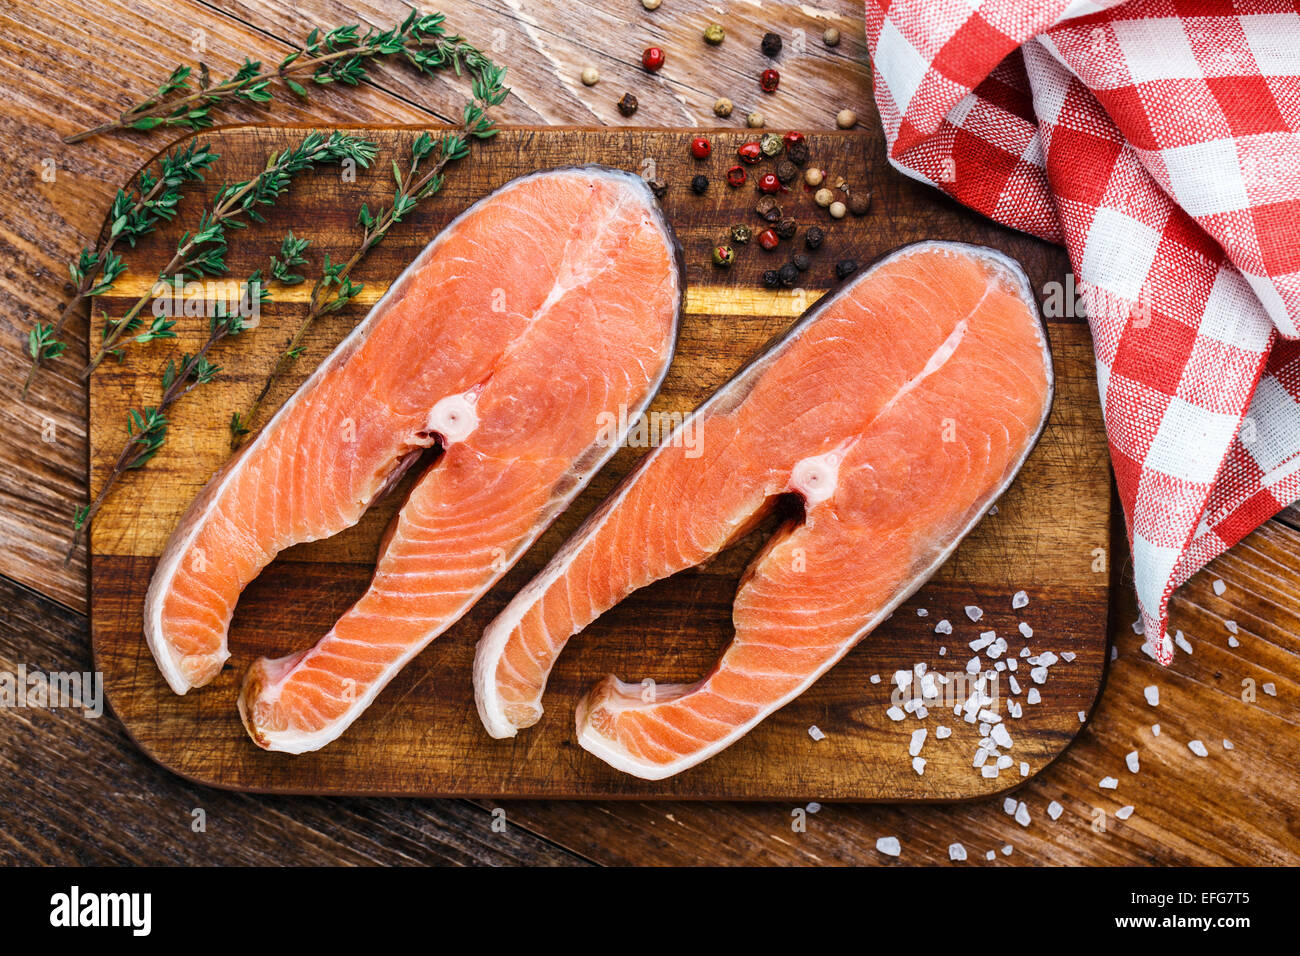 Salmon steak on a wooden board Stock Photo